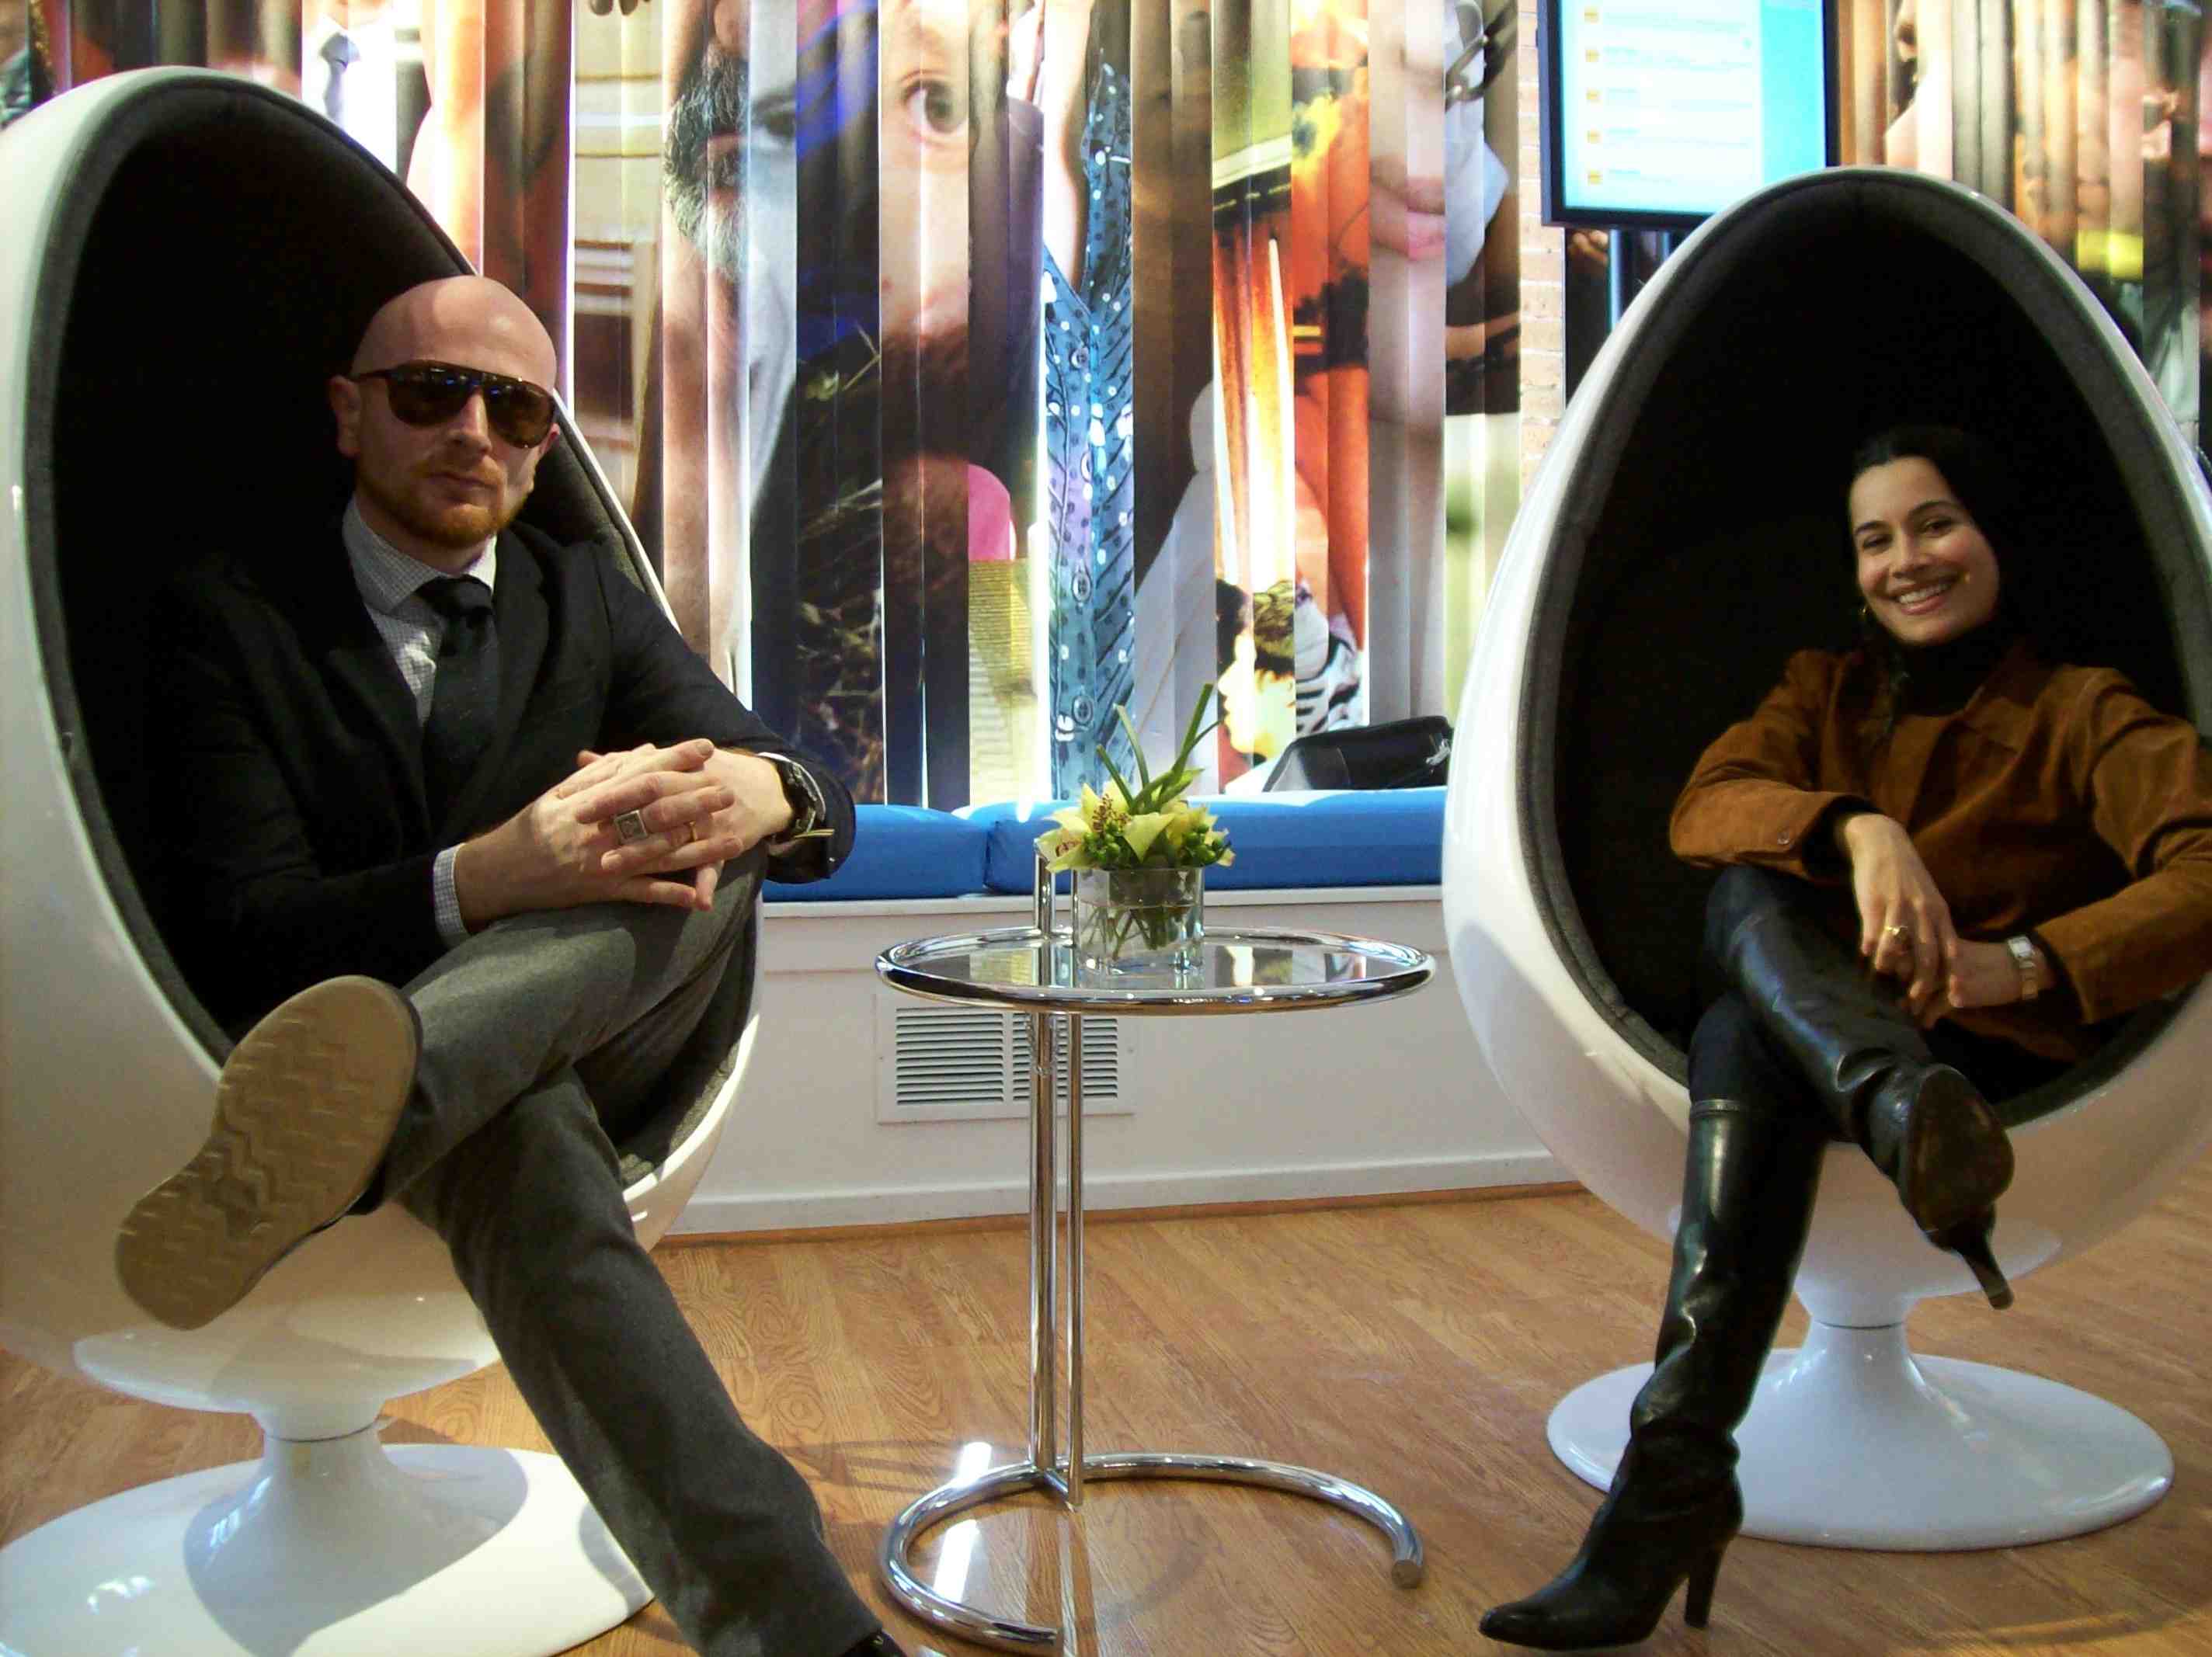 Govindini Murty and director Mads Brugger at Hewlett-Packard House, Sundance 2012.